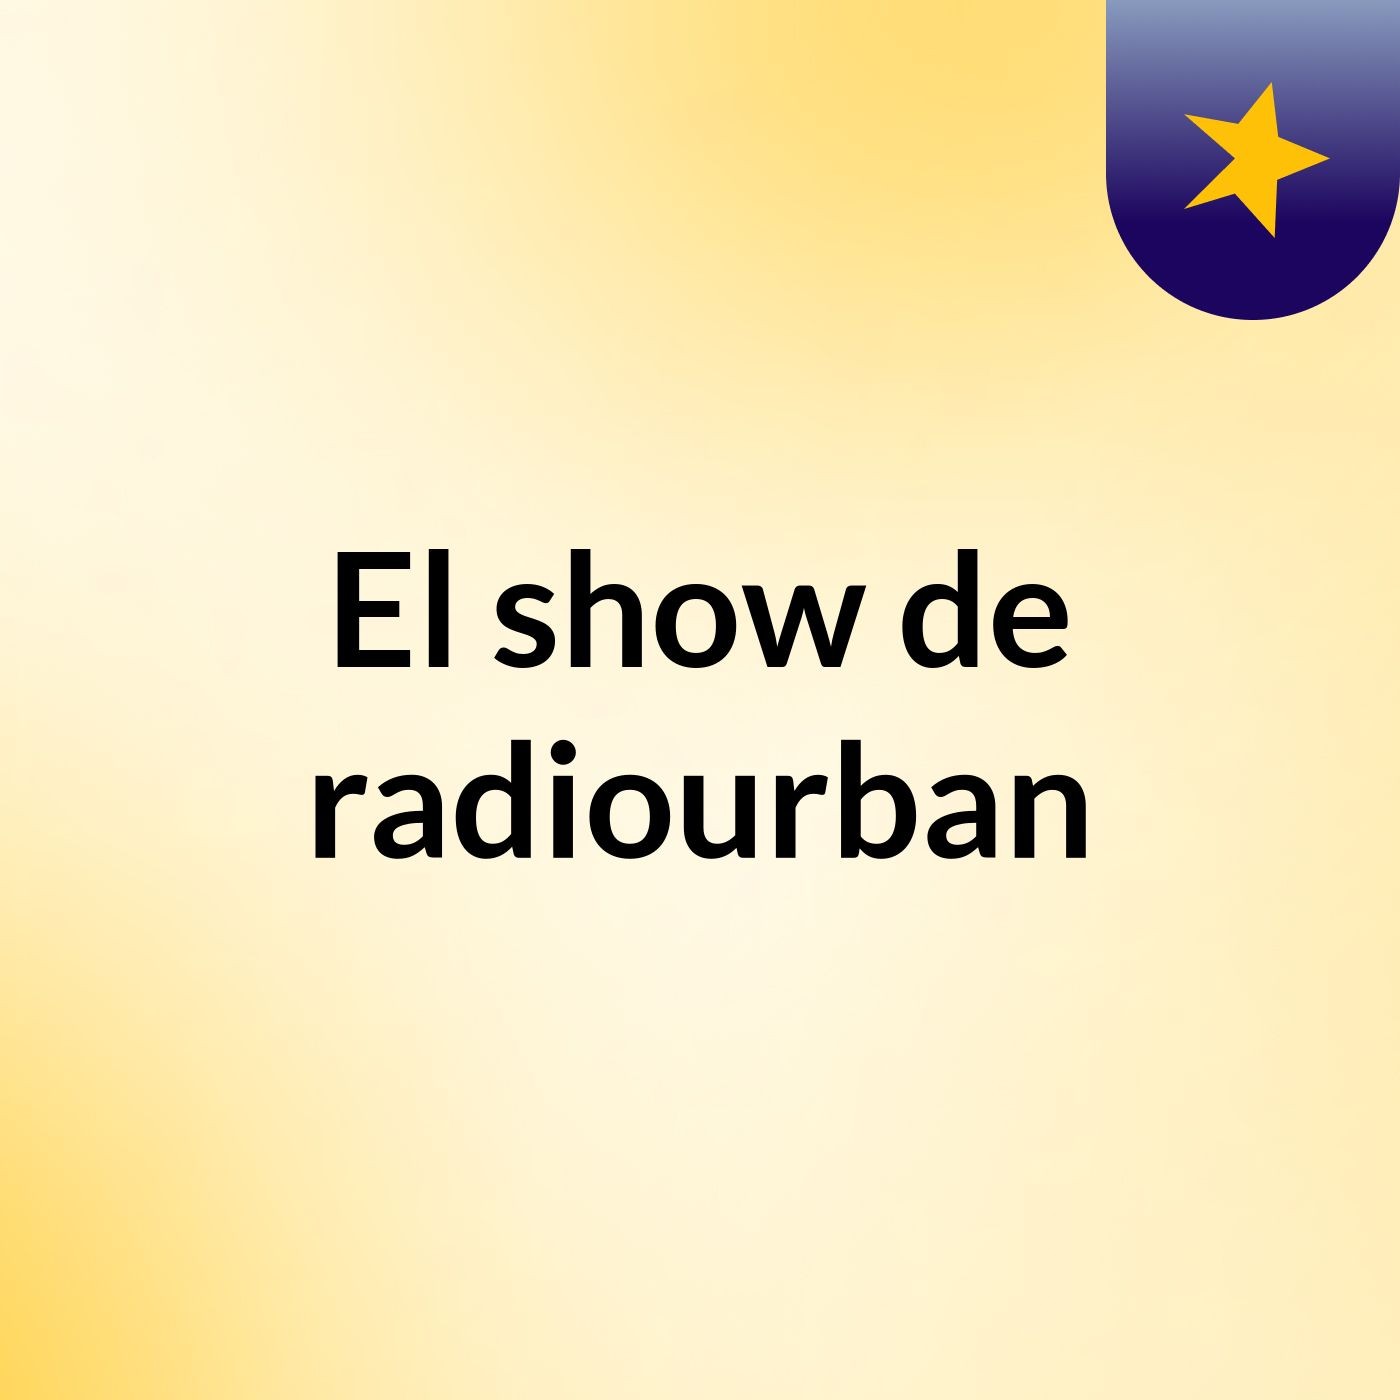 El show de radiourban